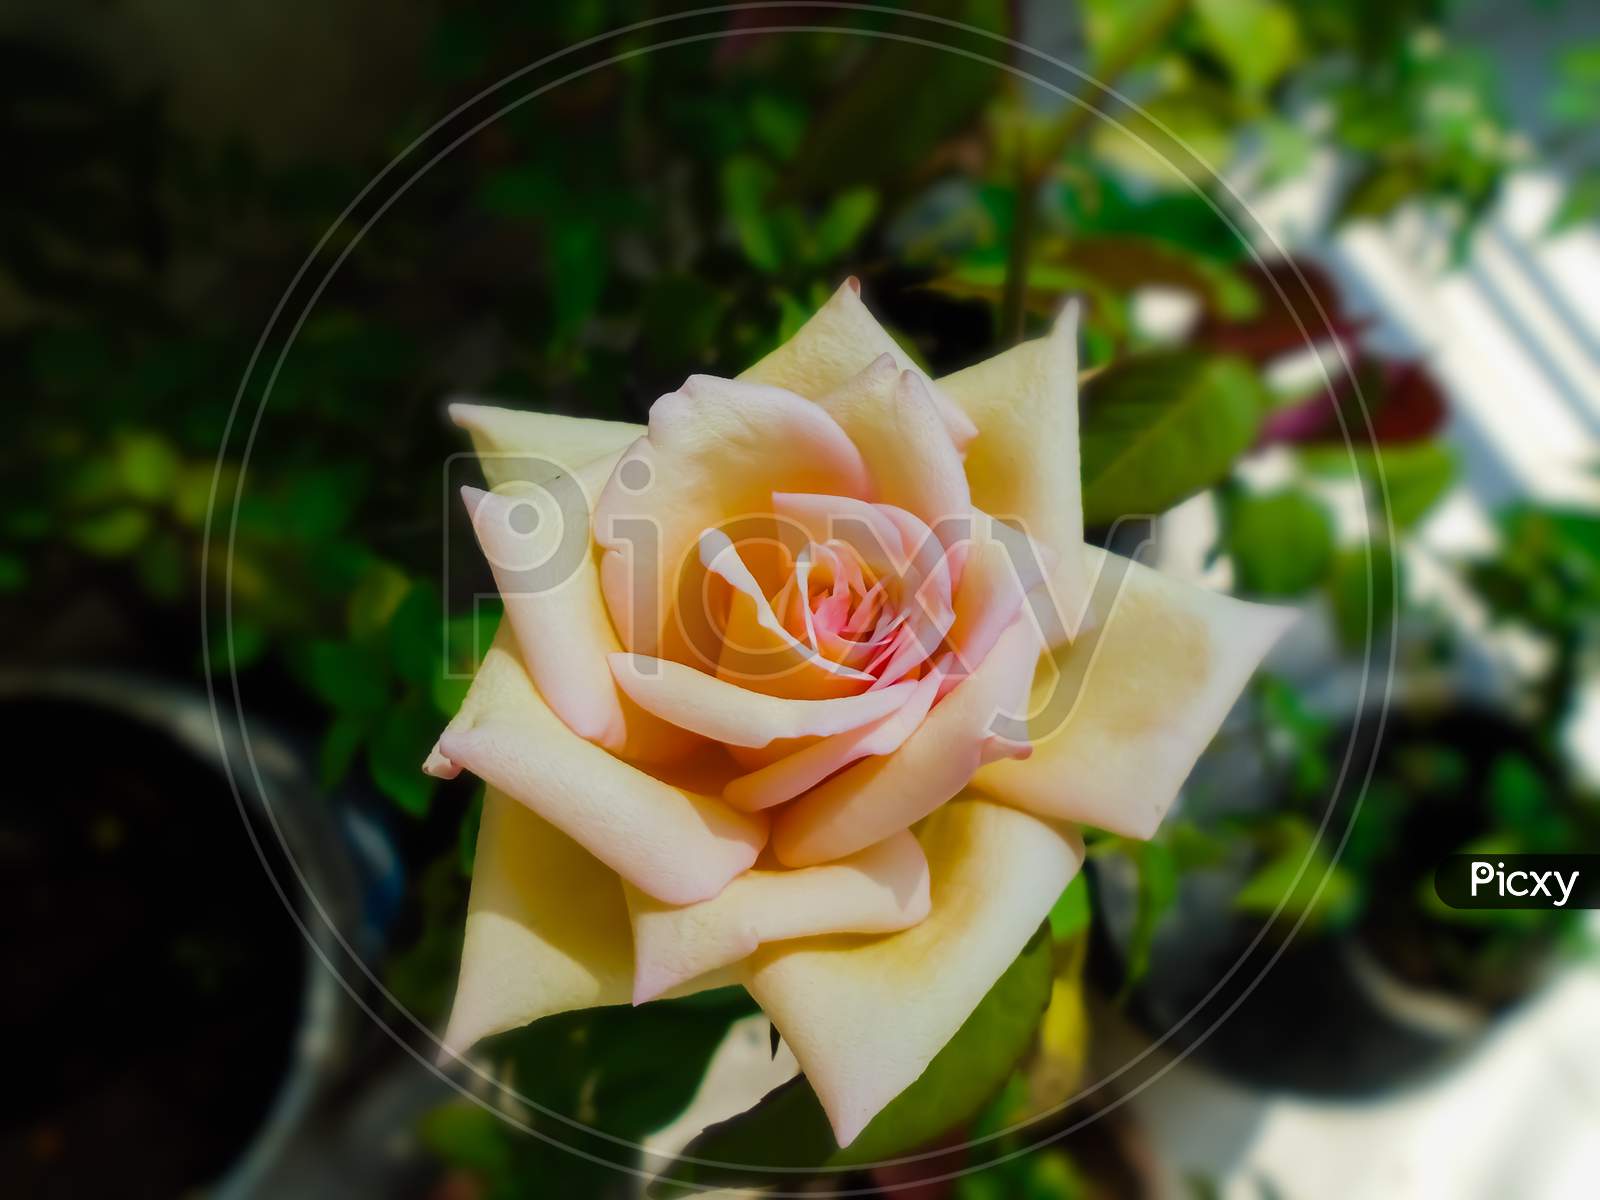 Photo of a beautiful rose close up